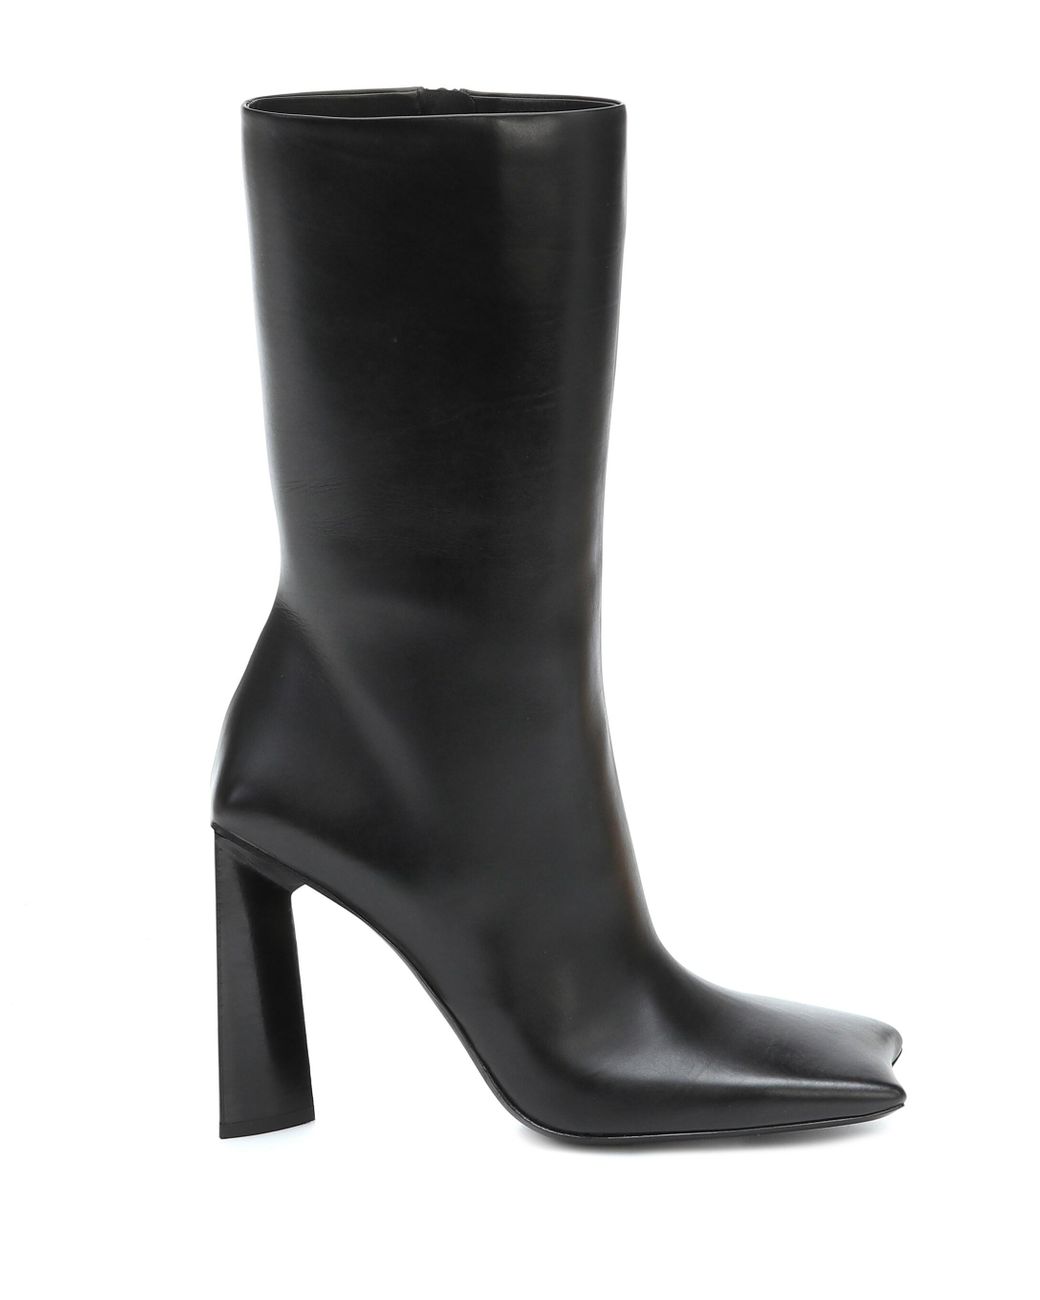 Balenciaga Moon Leather Boots in Black | Lyst